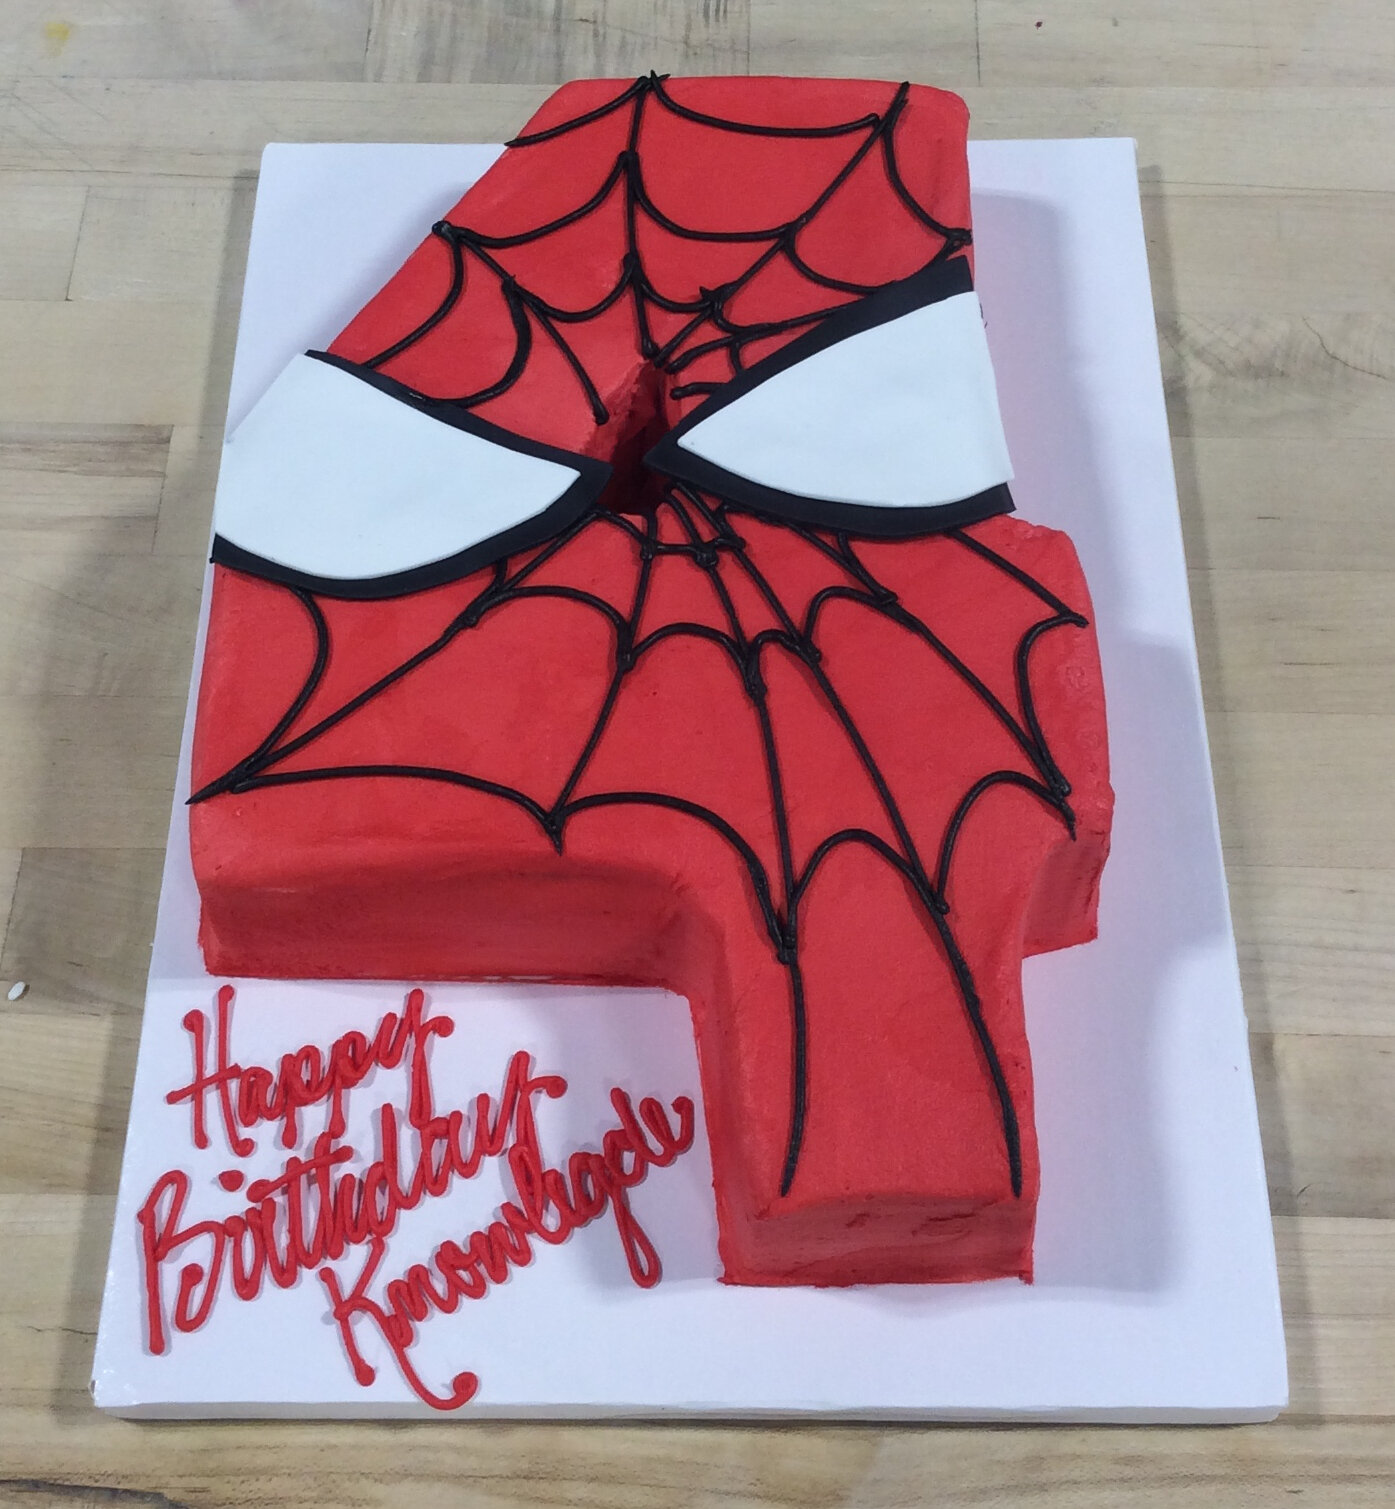 4 shaped Spiderman Cake.jpeg